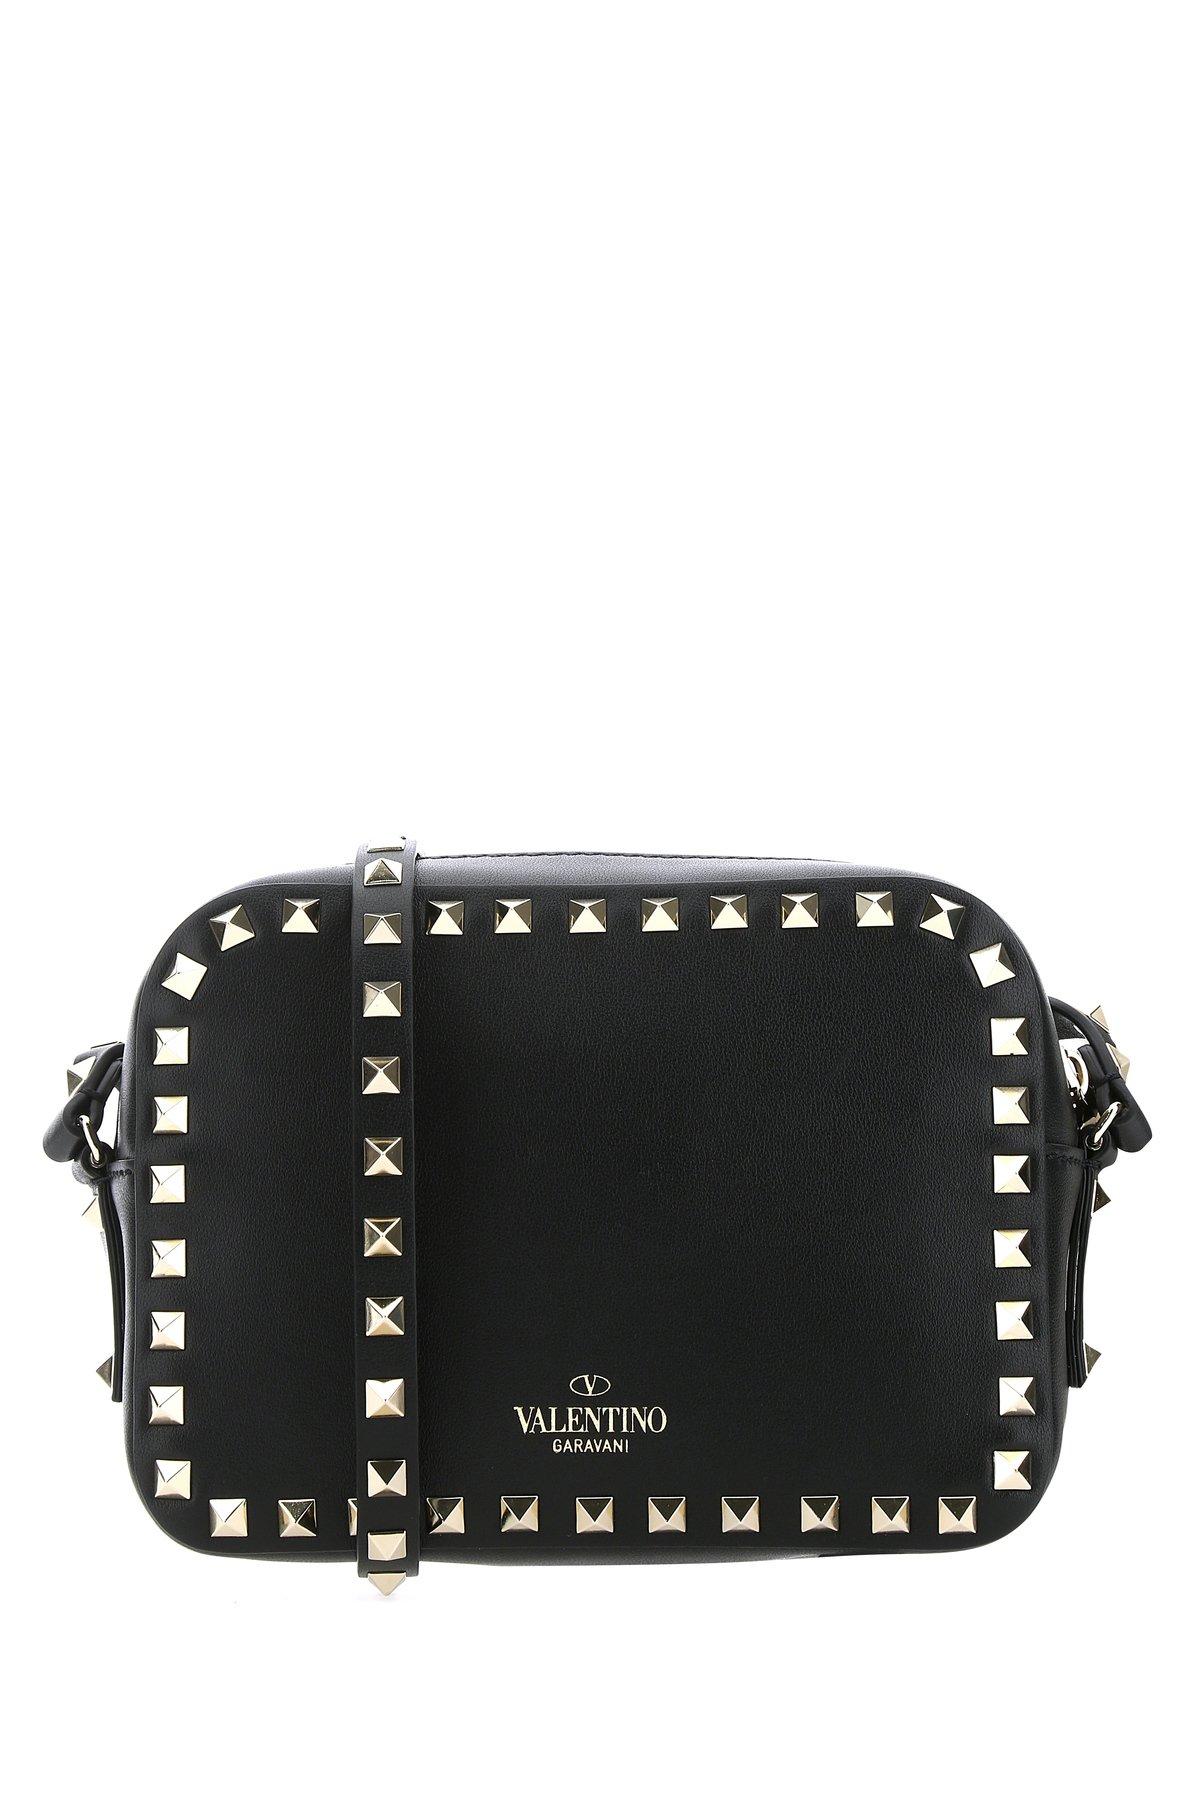 Valentino Leather Garavani Rockstud Crossbody Bag in Black - Lyst